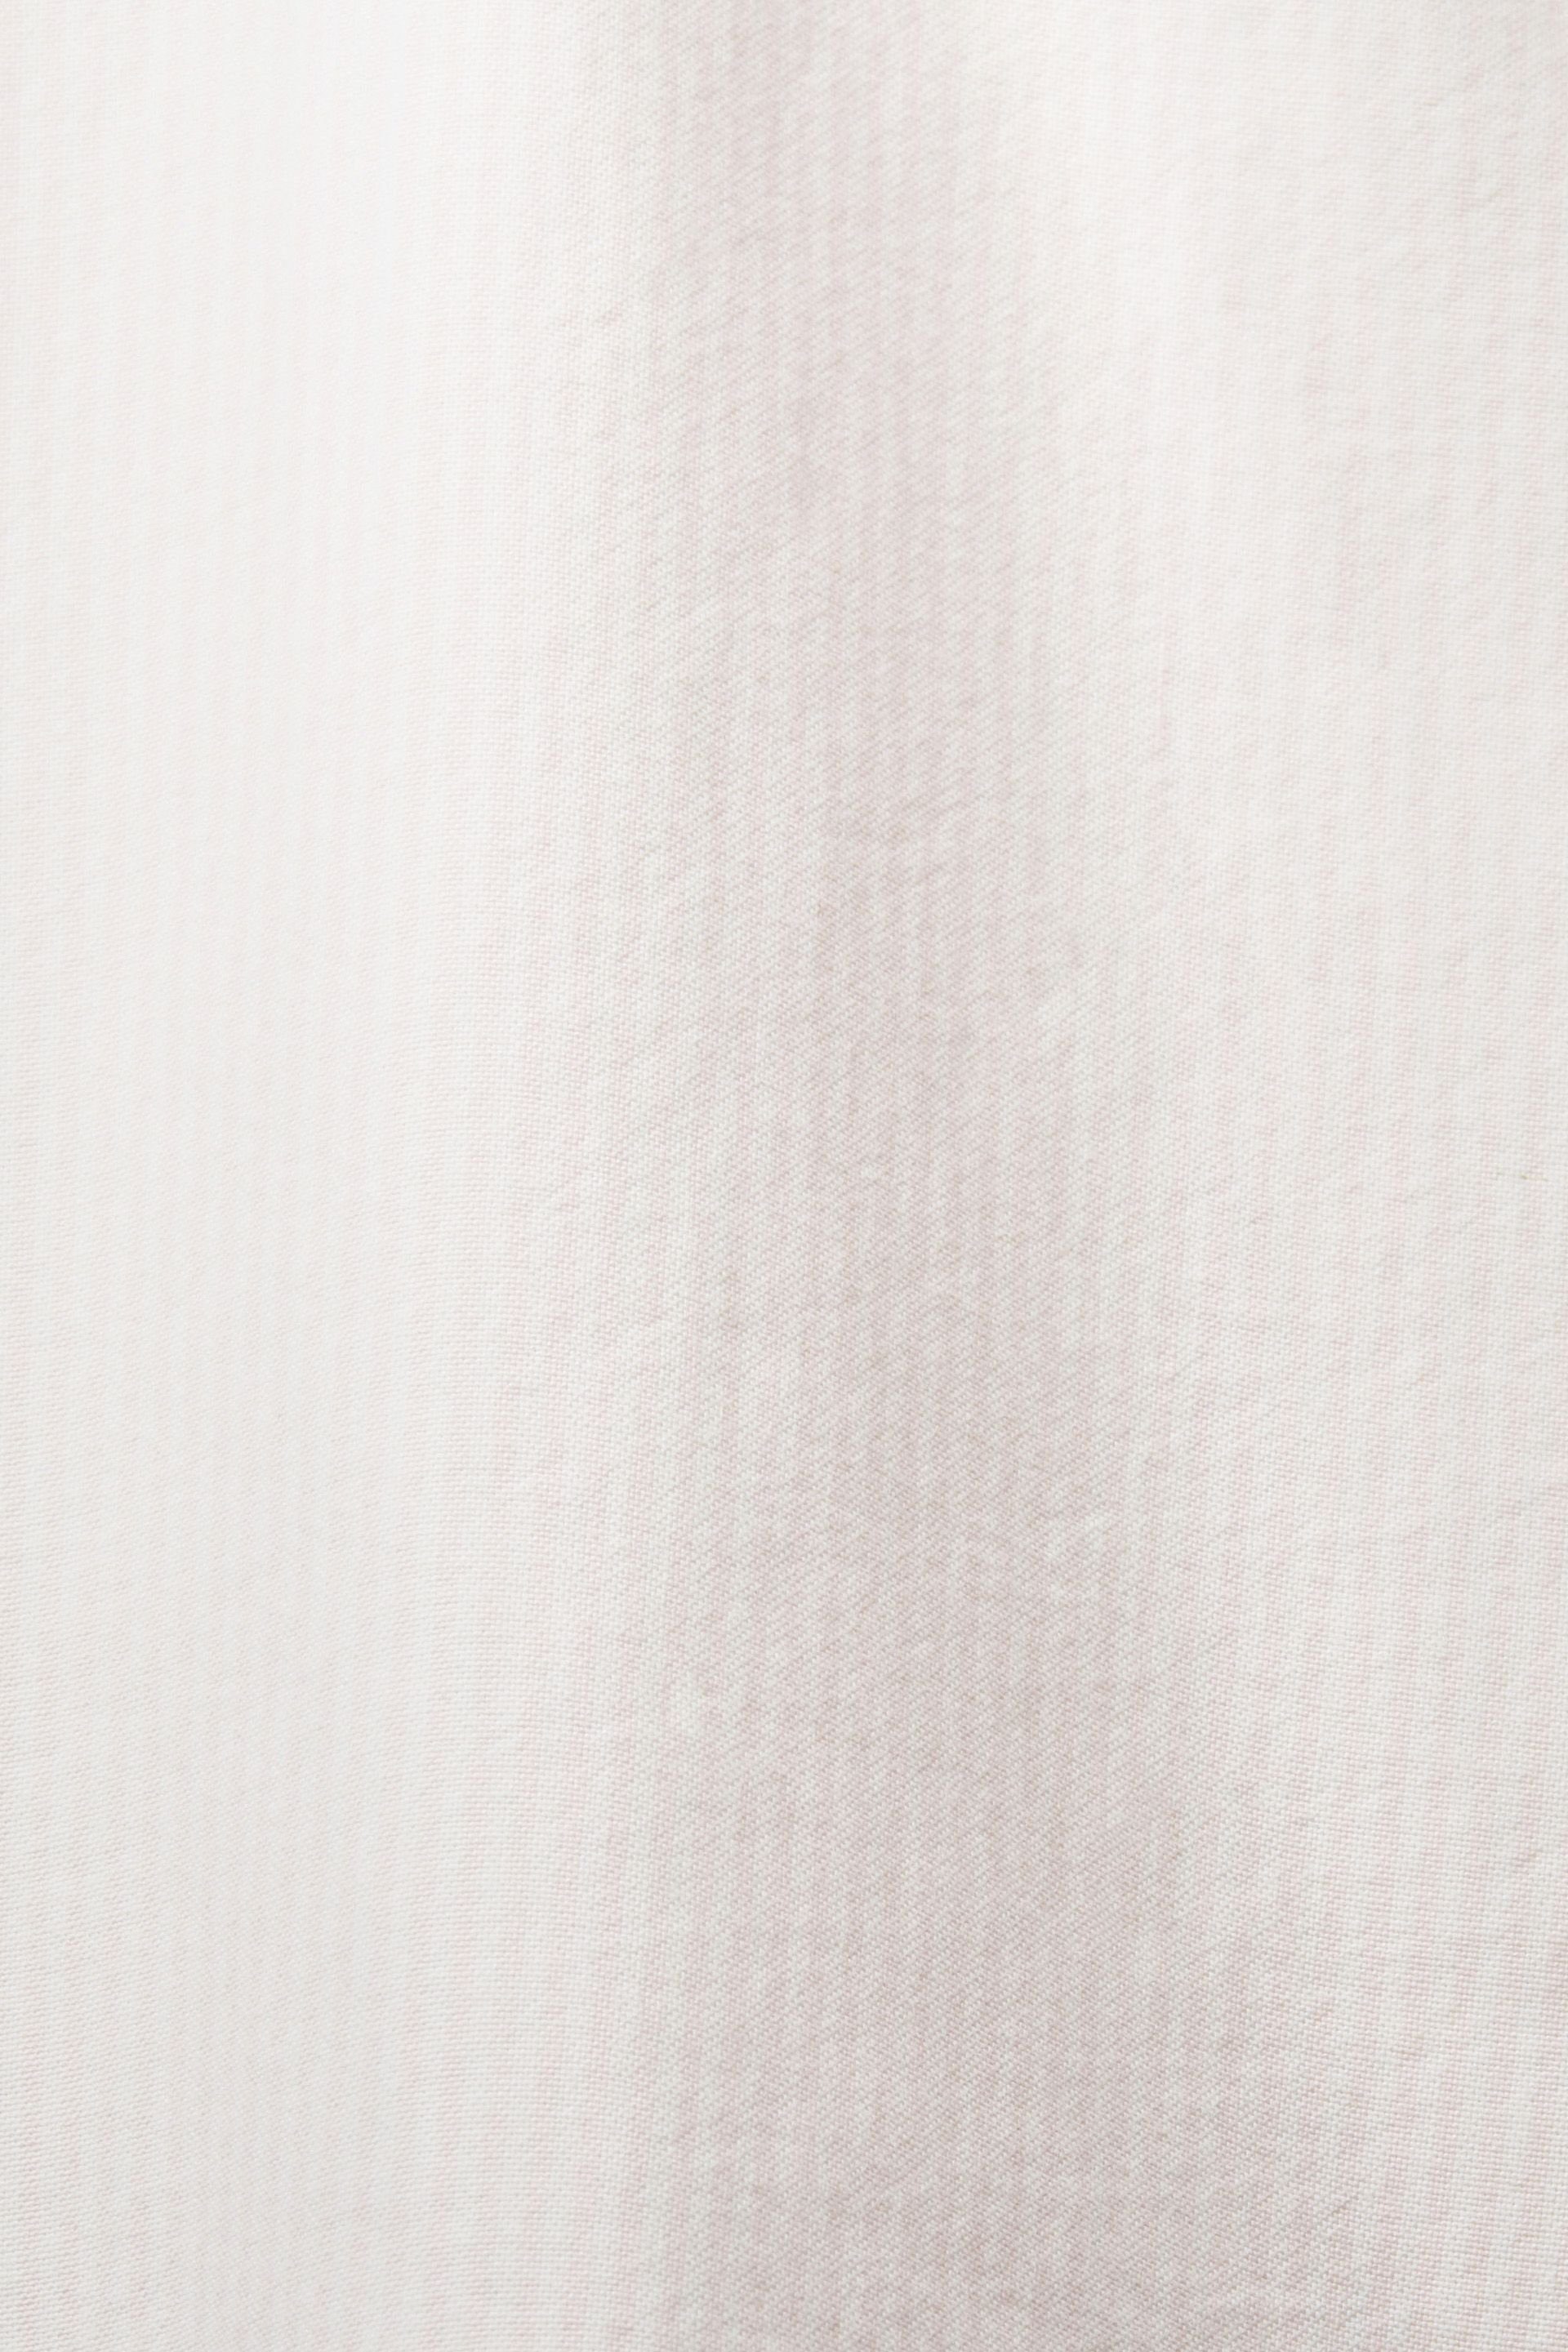 Esprit Langarmhemd off white